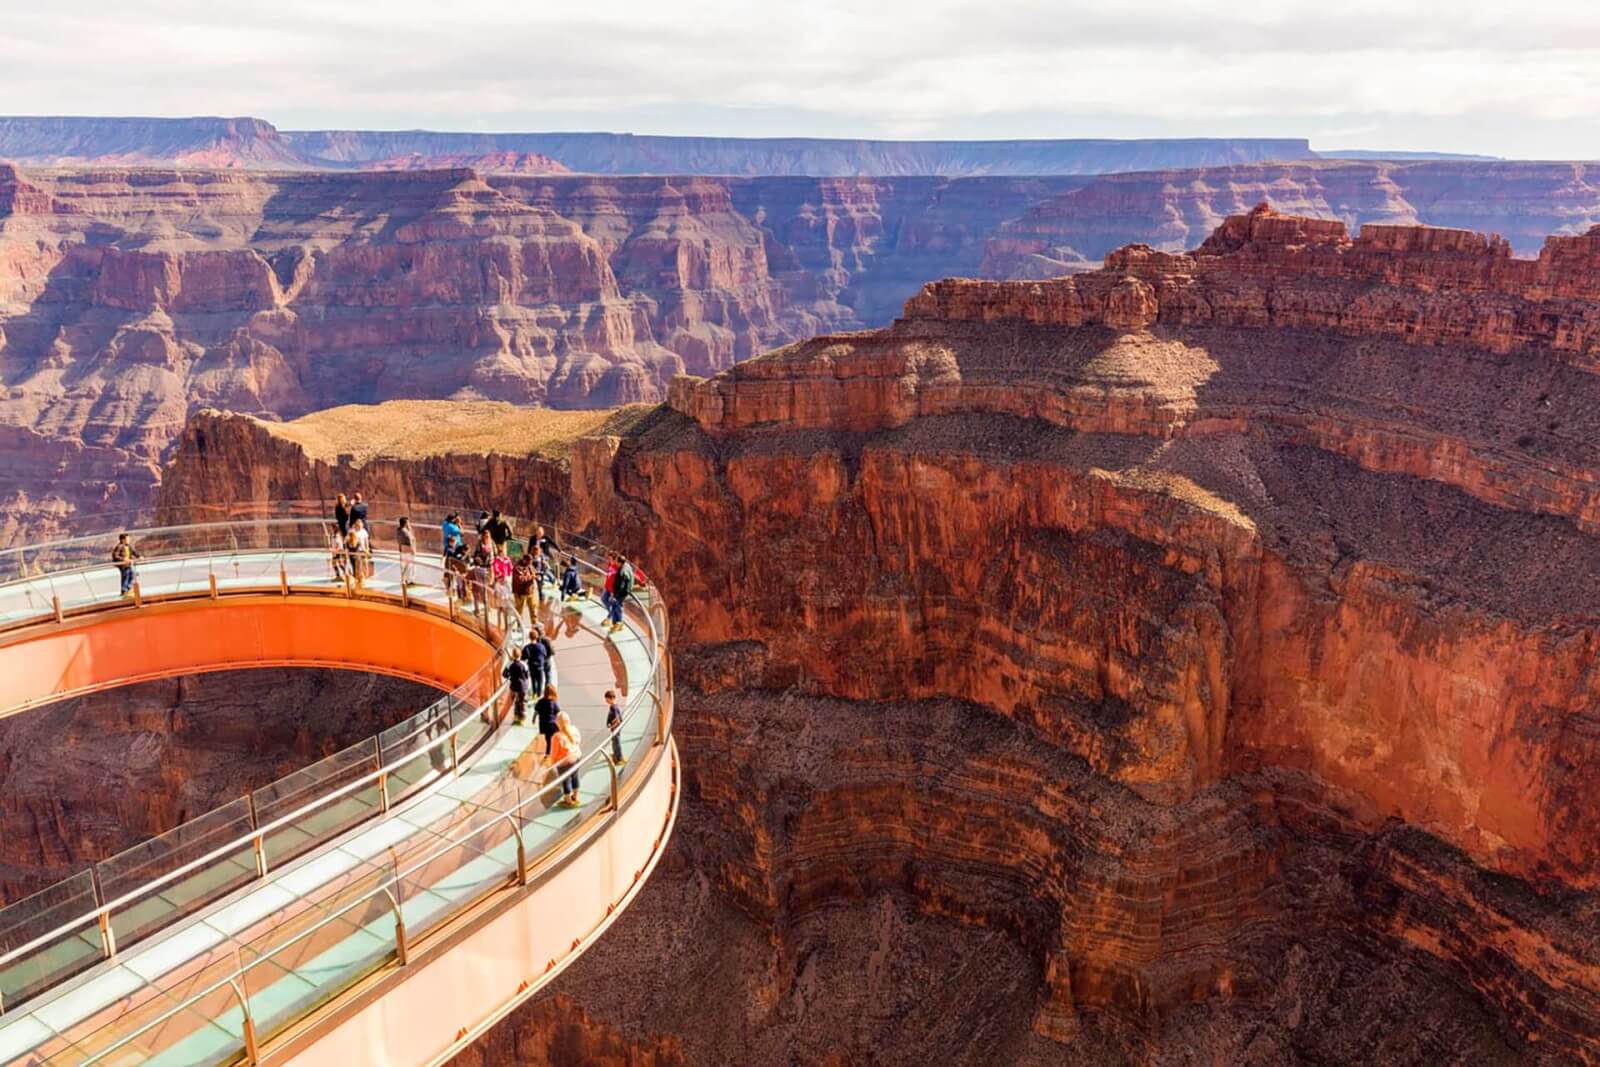 Is Grand Canyon Nevada or Arizona?